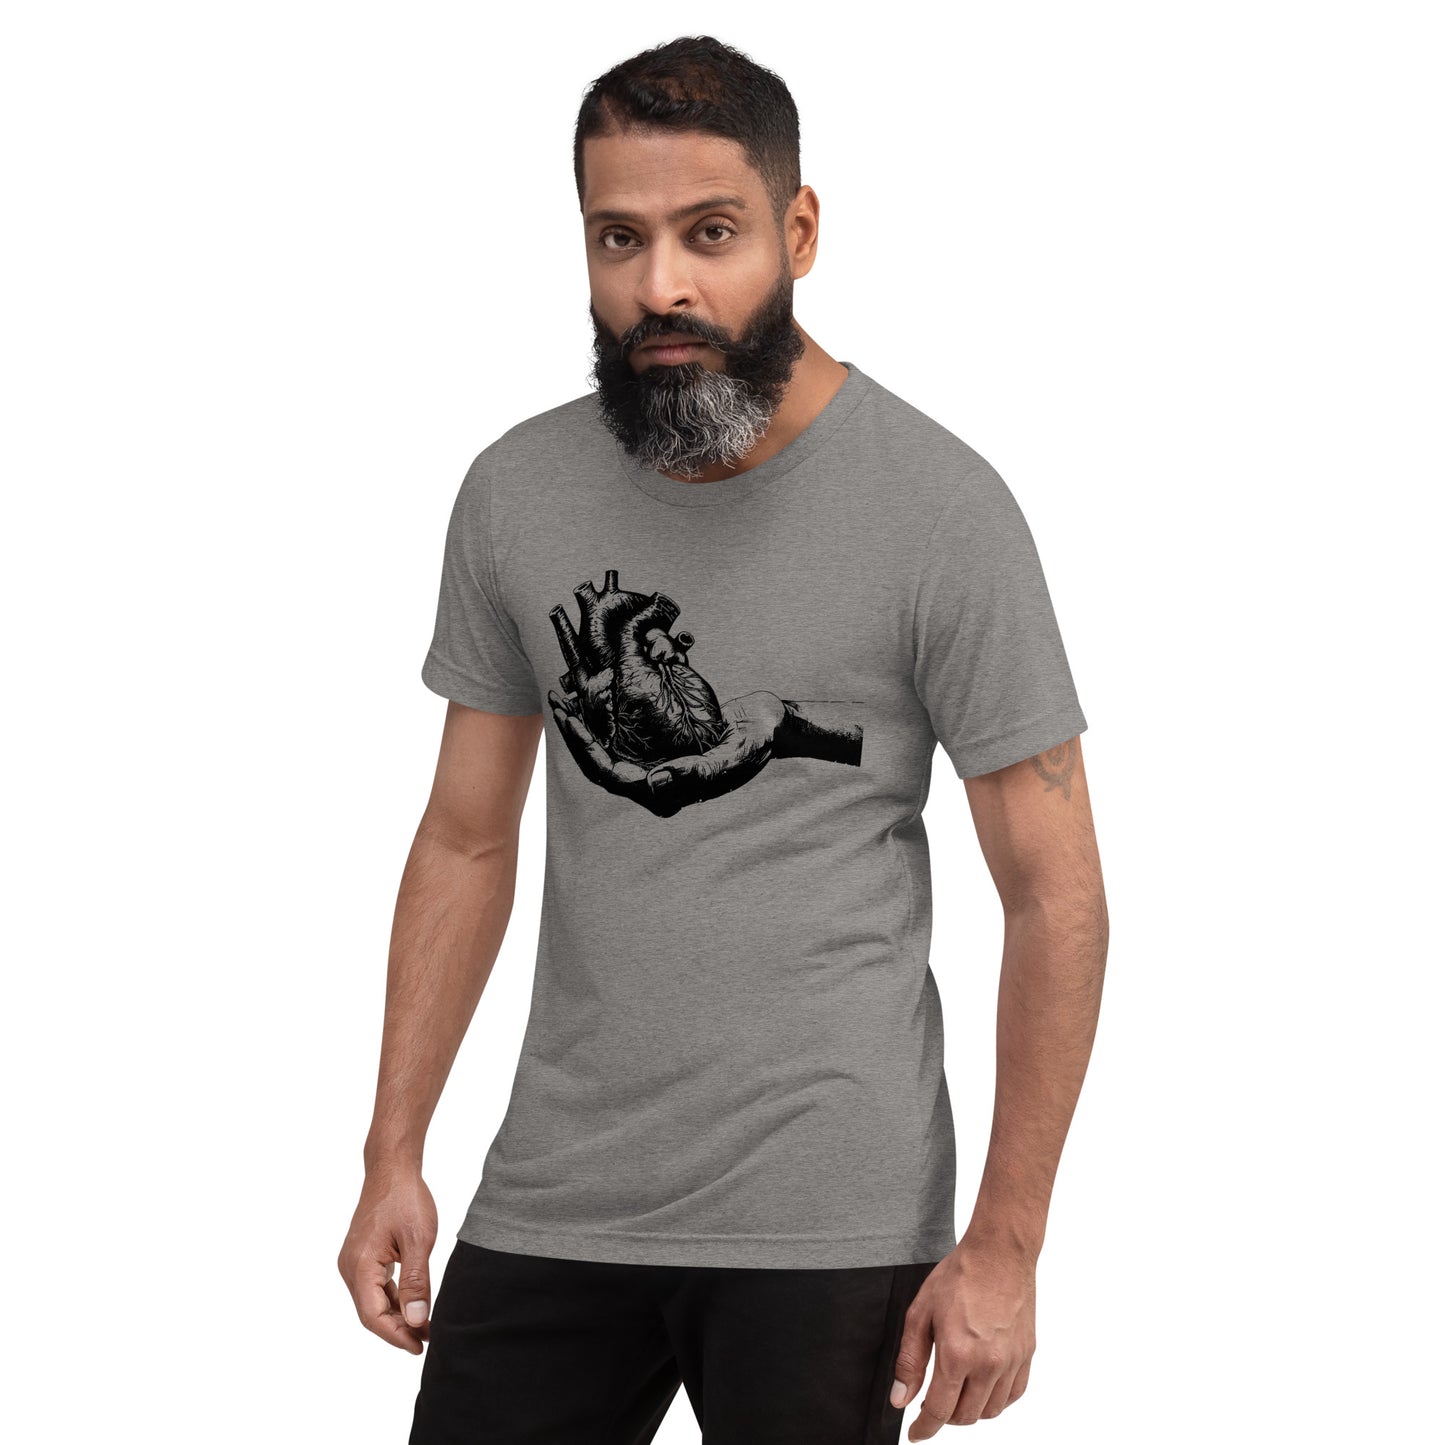 Blood Oath t-shirt: Dark Print on Light Shirt